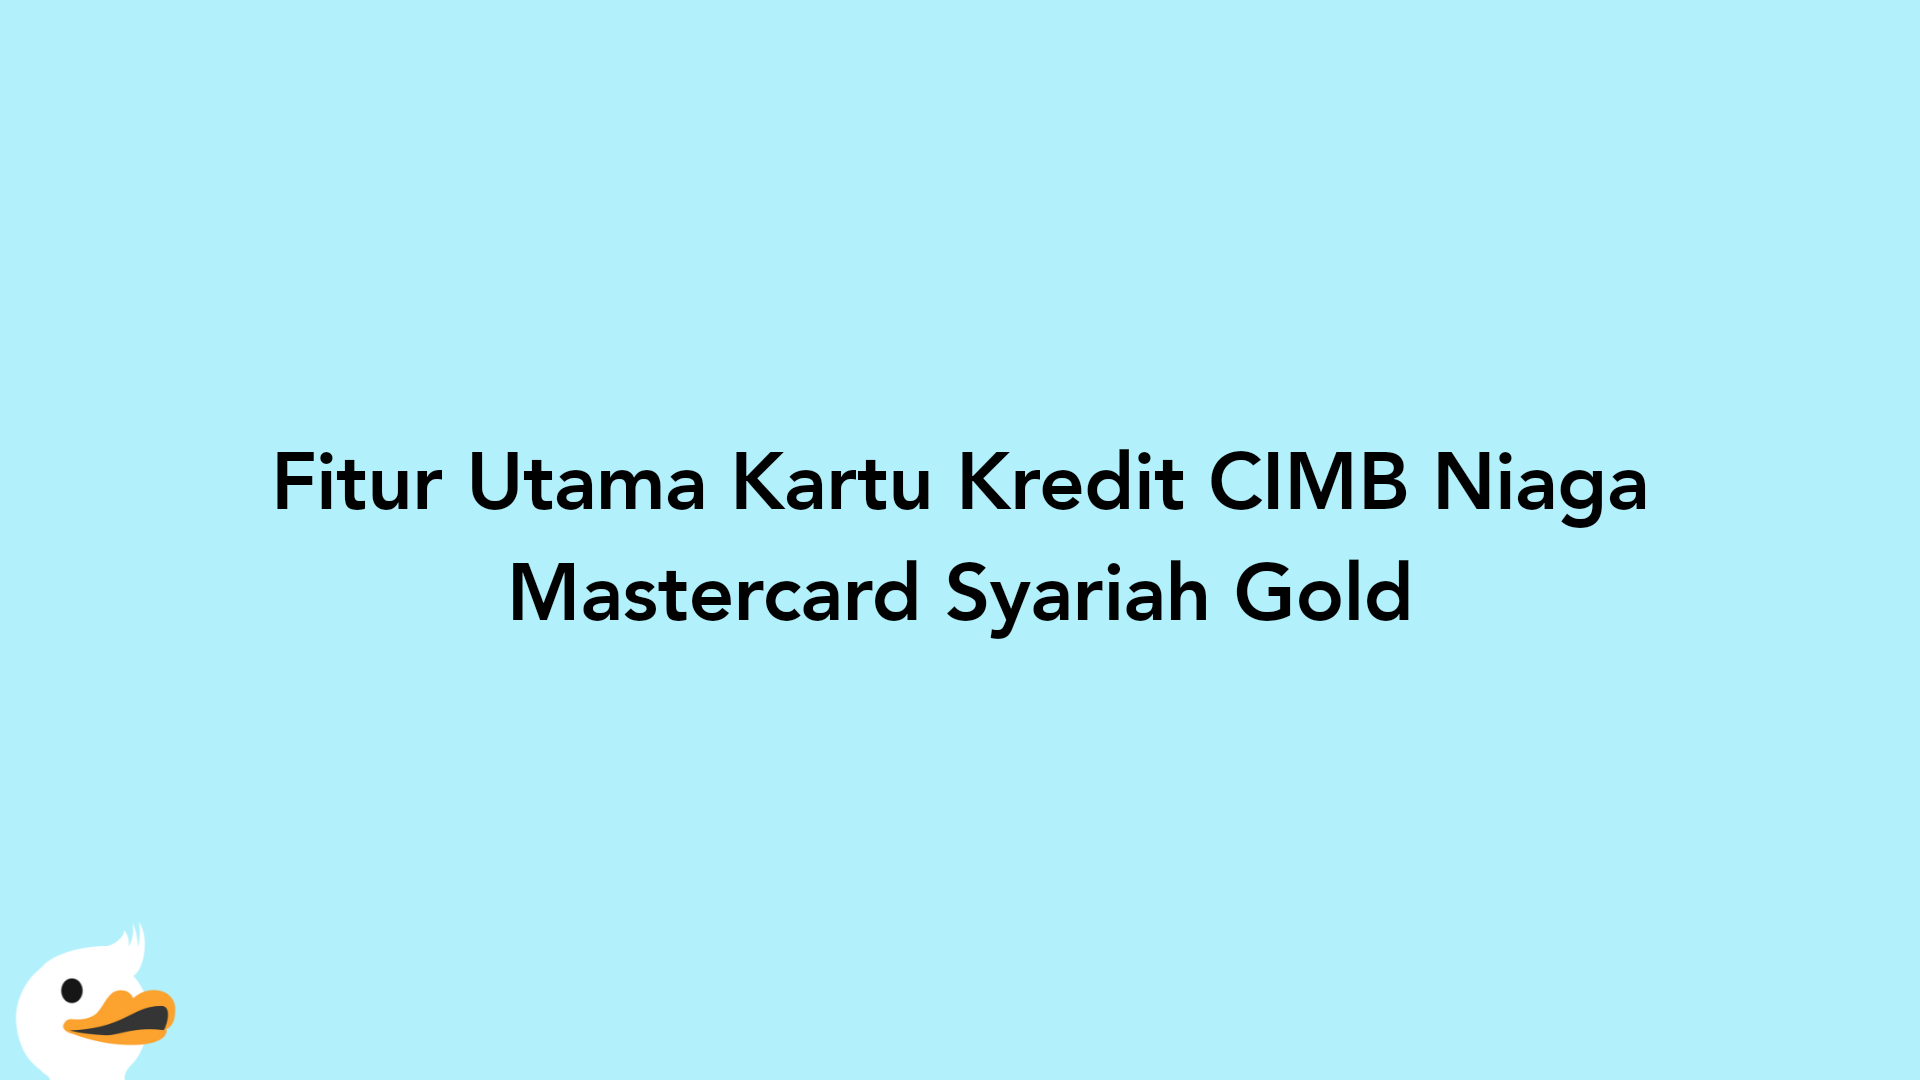 Fitur Utama Kartu Kredit CIMB Niaga Mastercard Syariah Gold